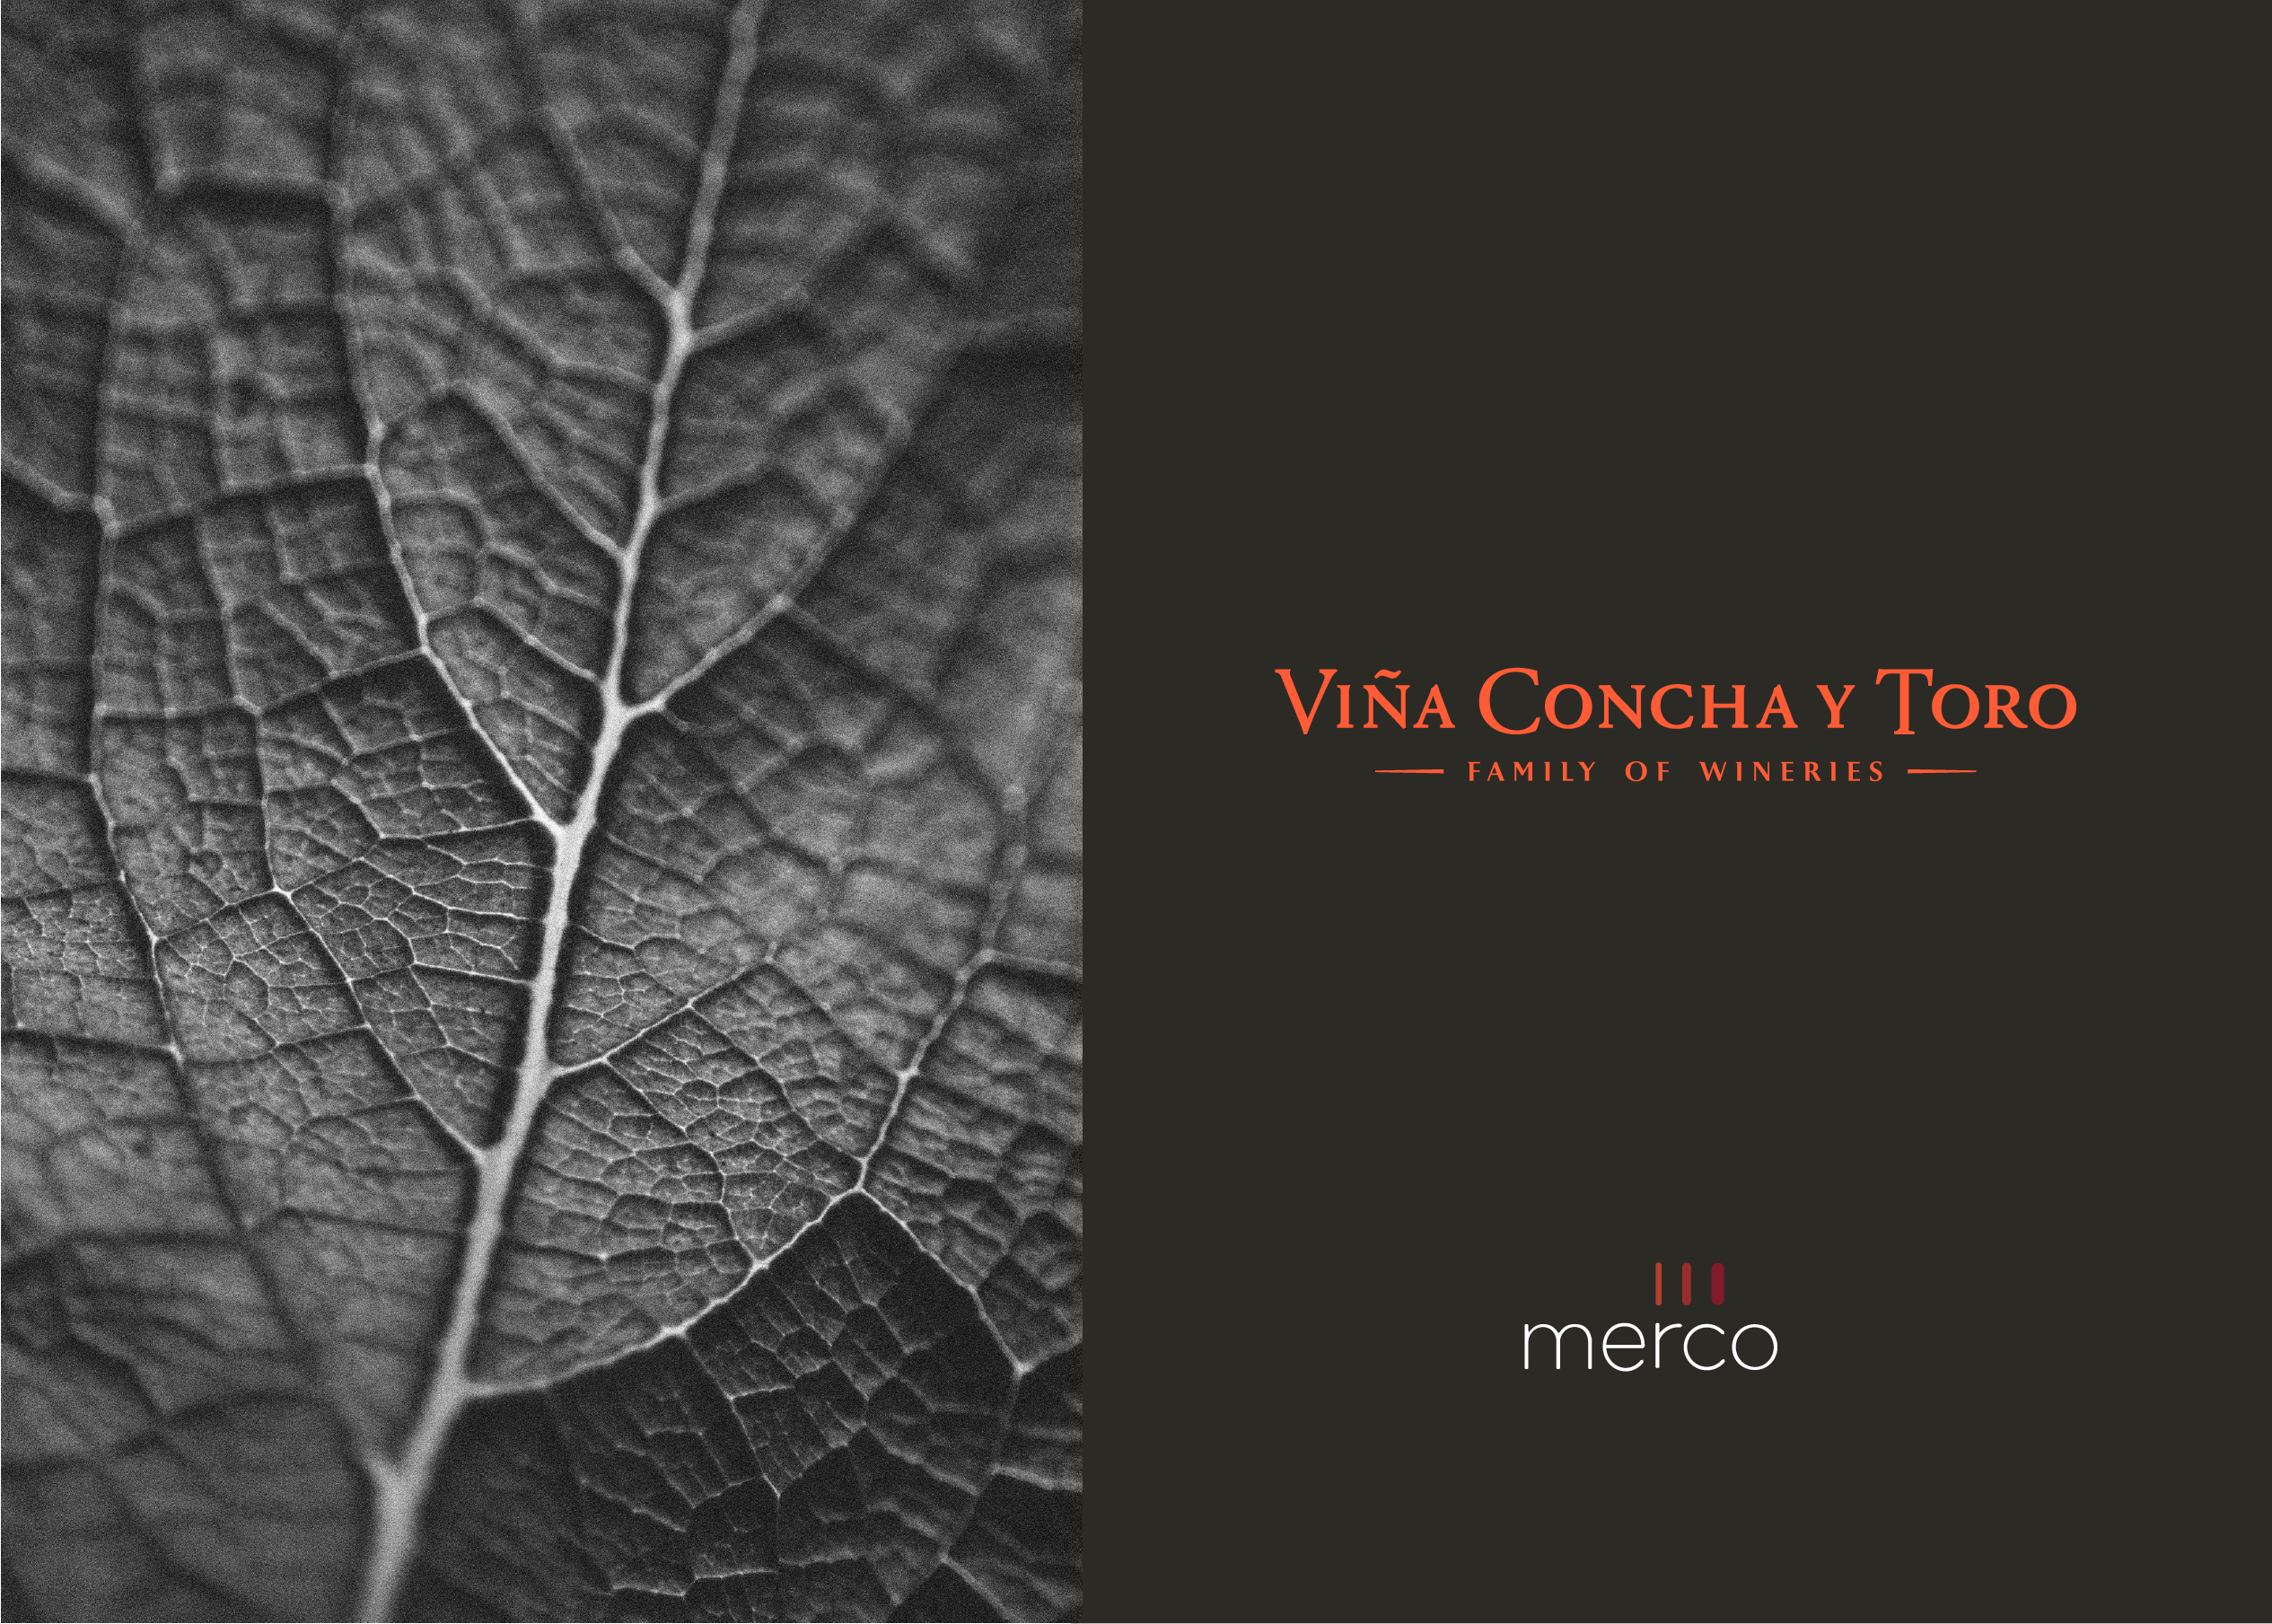 Viña Concha y Toro obtains ninth place in corporate reputation ranking